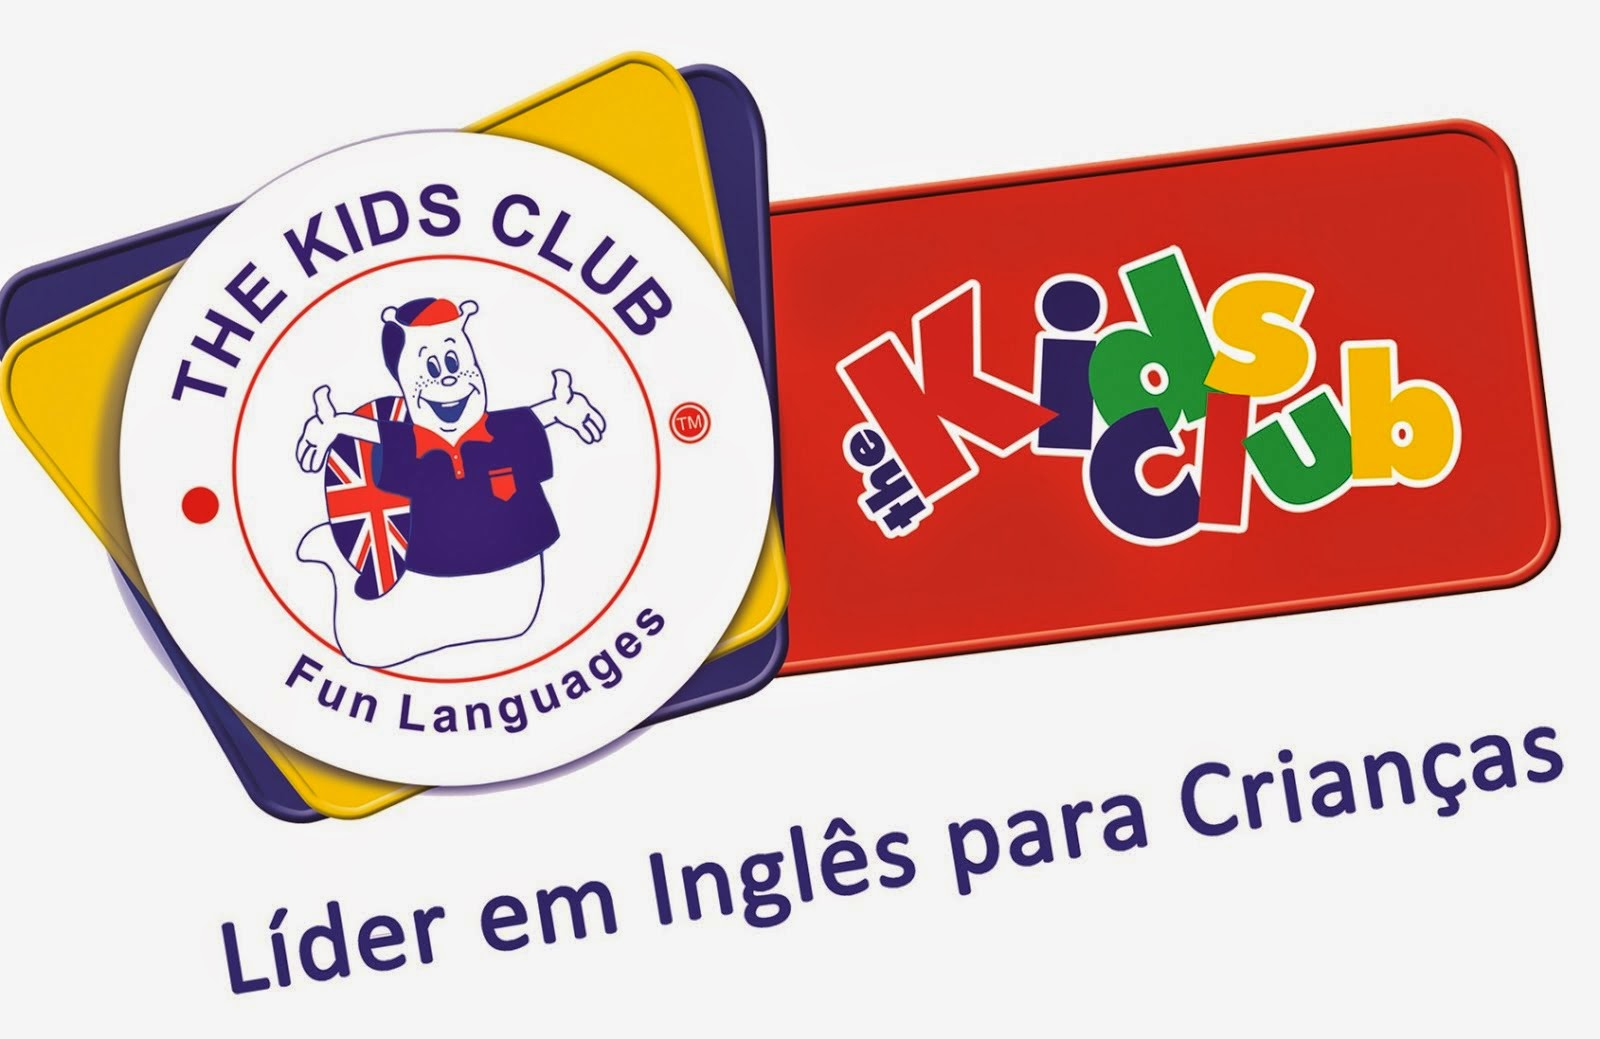 The Kids Club Micro franquias